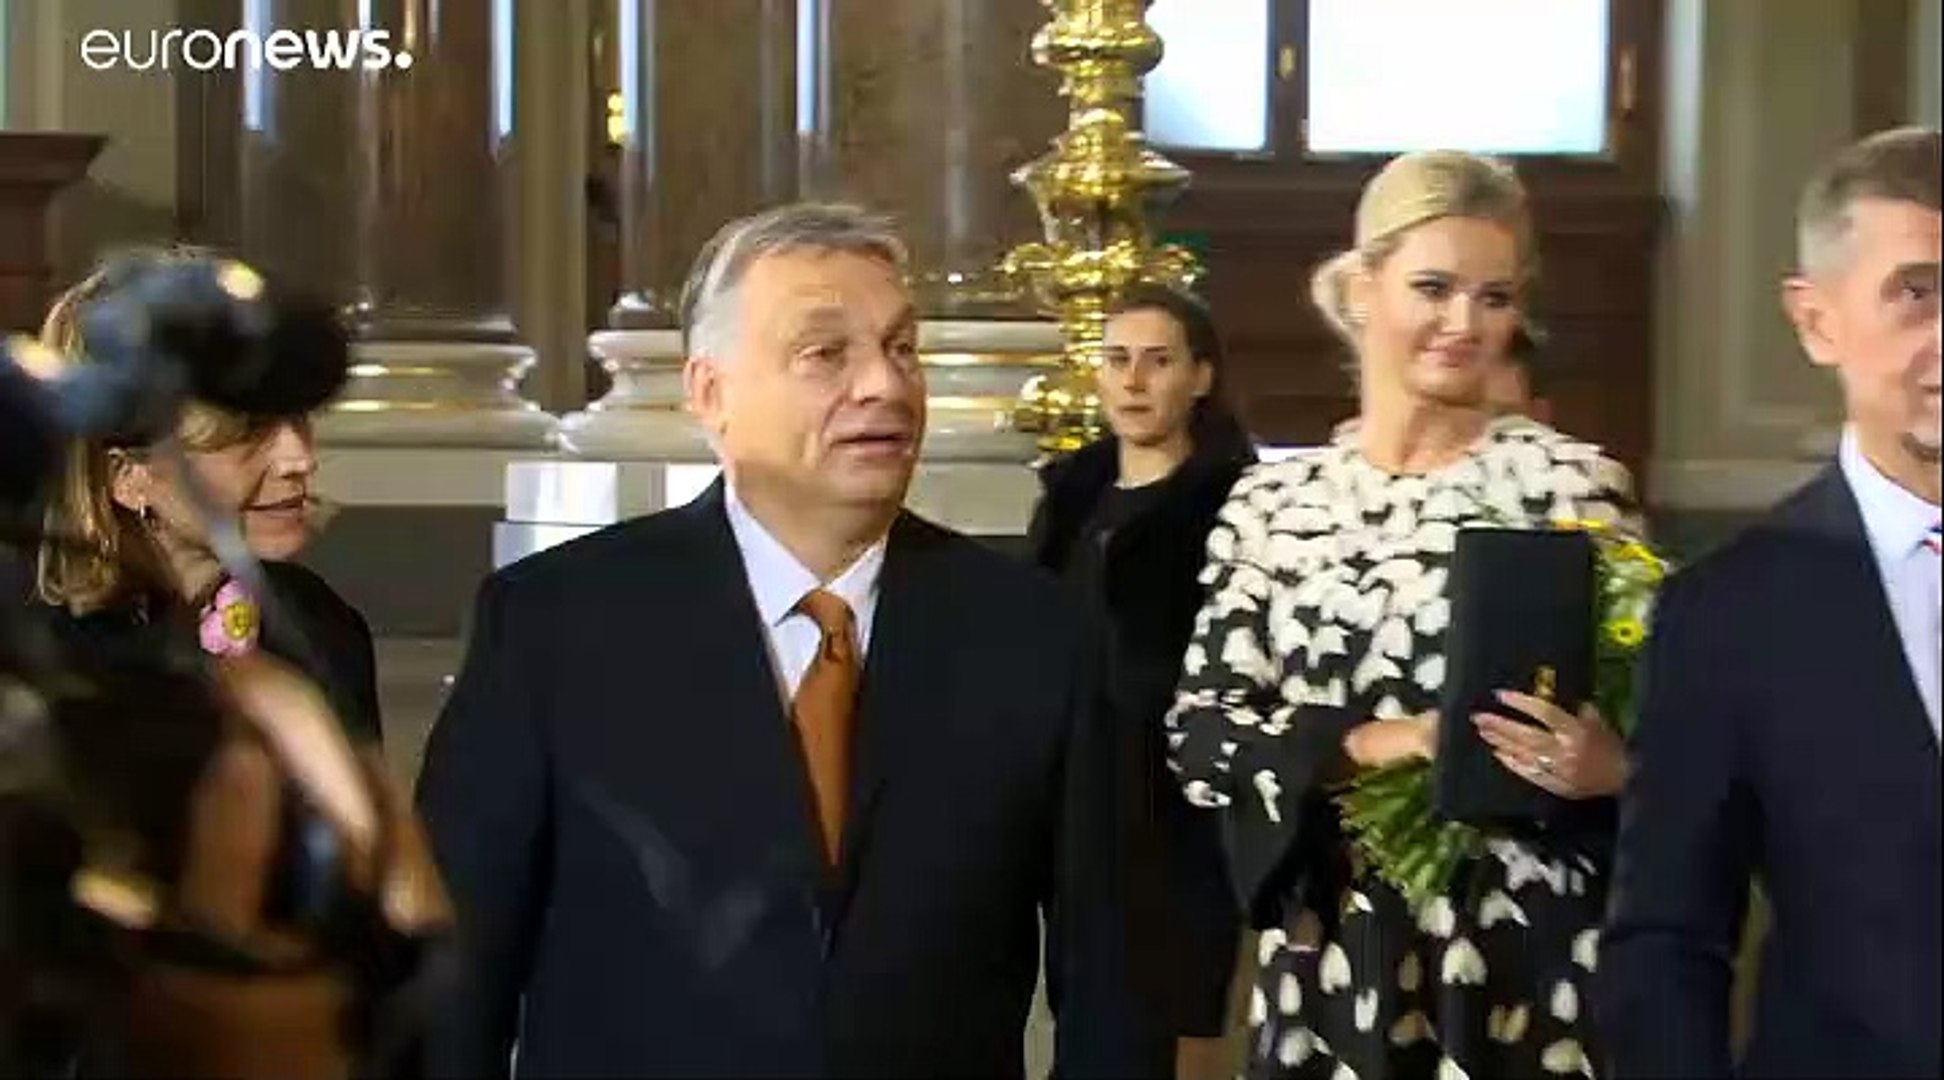 Orbán Viktor: Európa jövője Közép-Európa